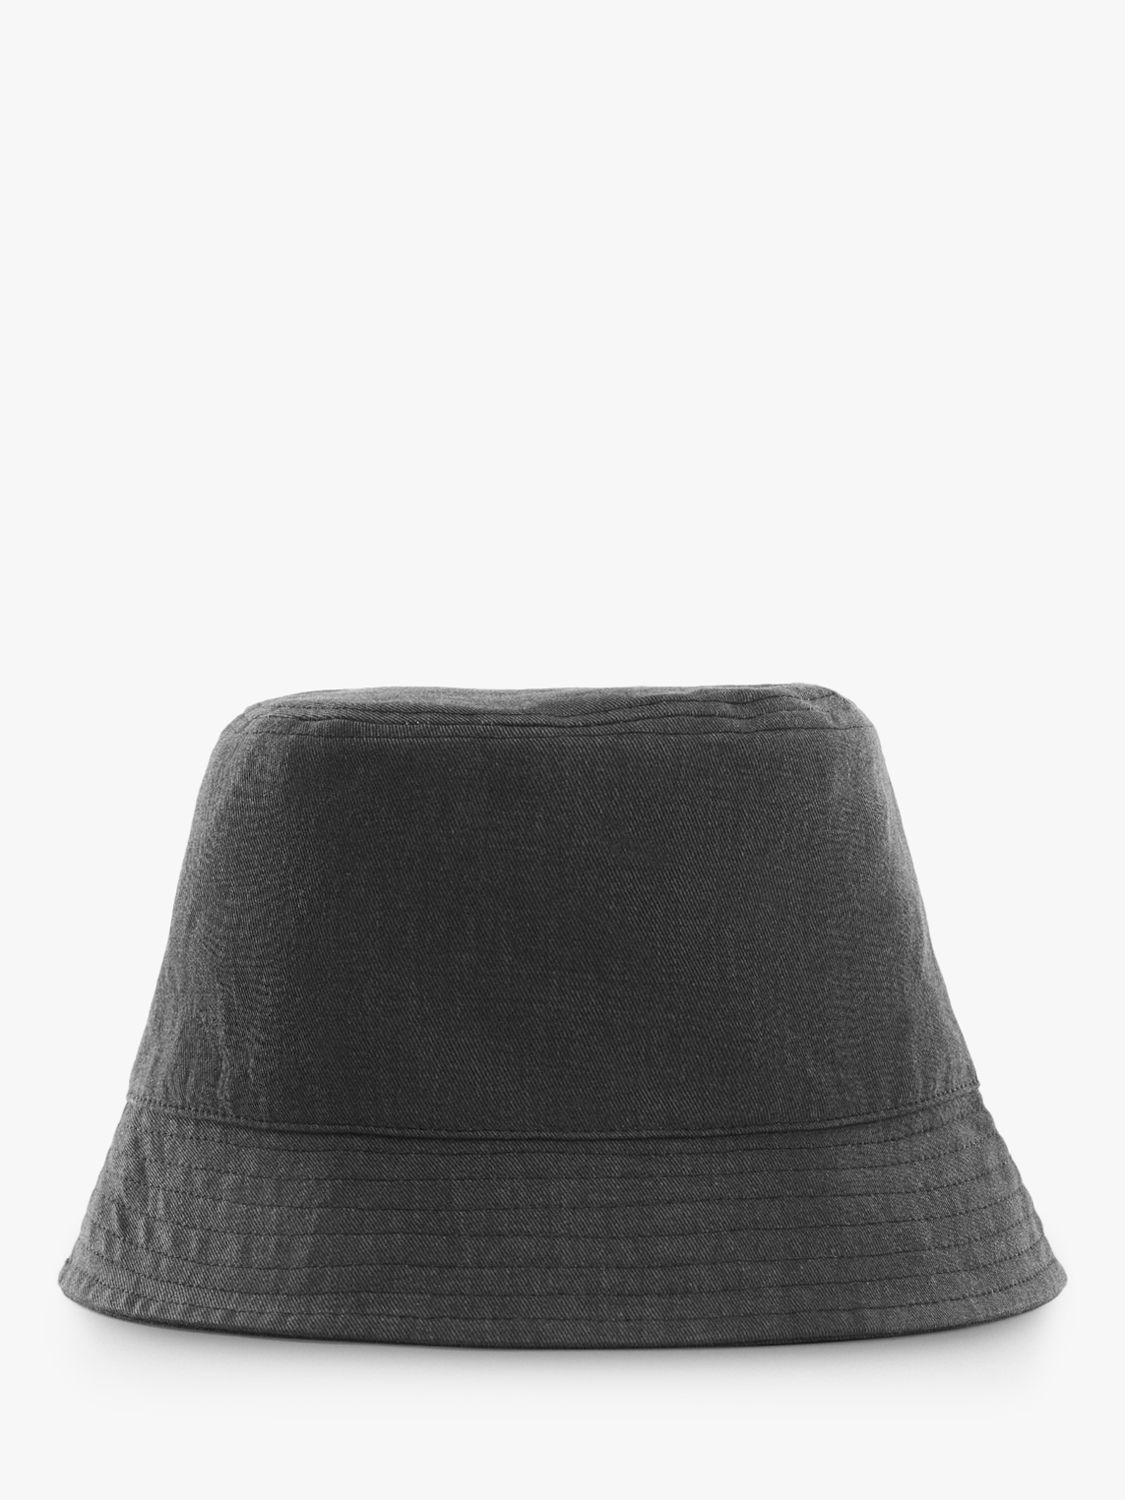 Mango Izzie Denim Bucket Hat, Black, One Size